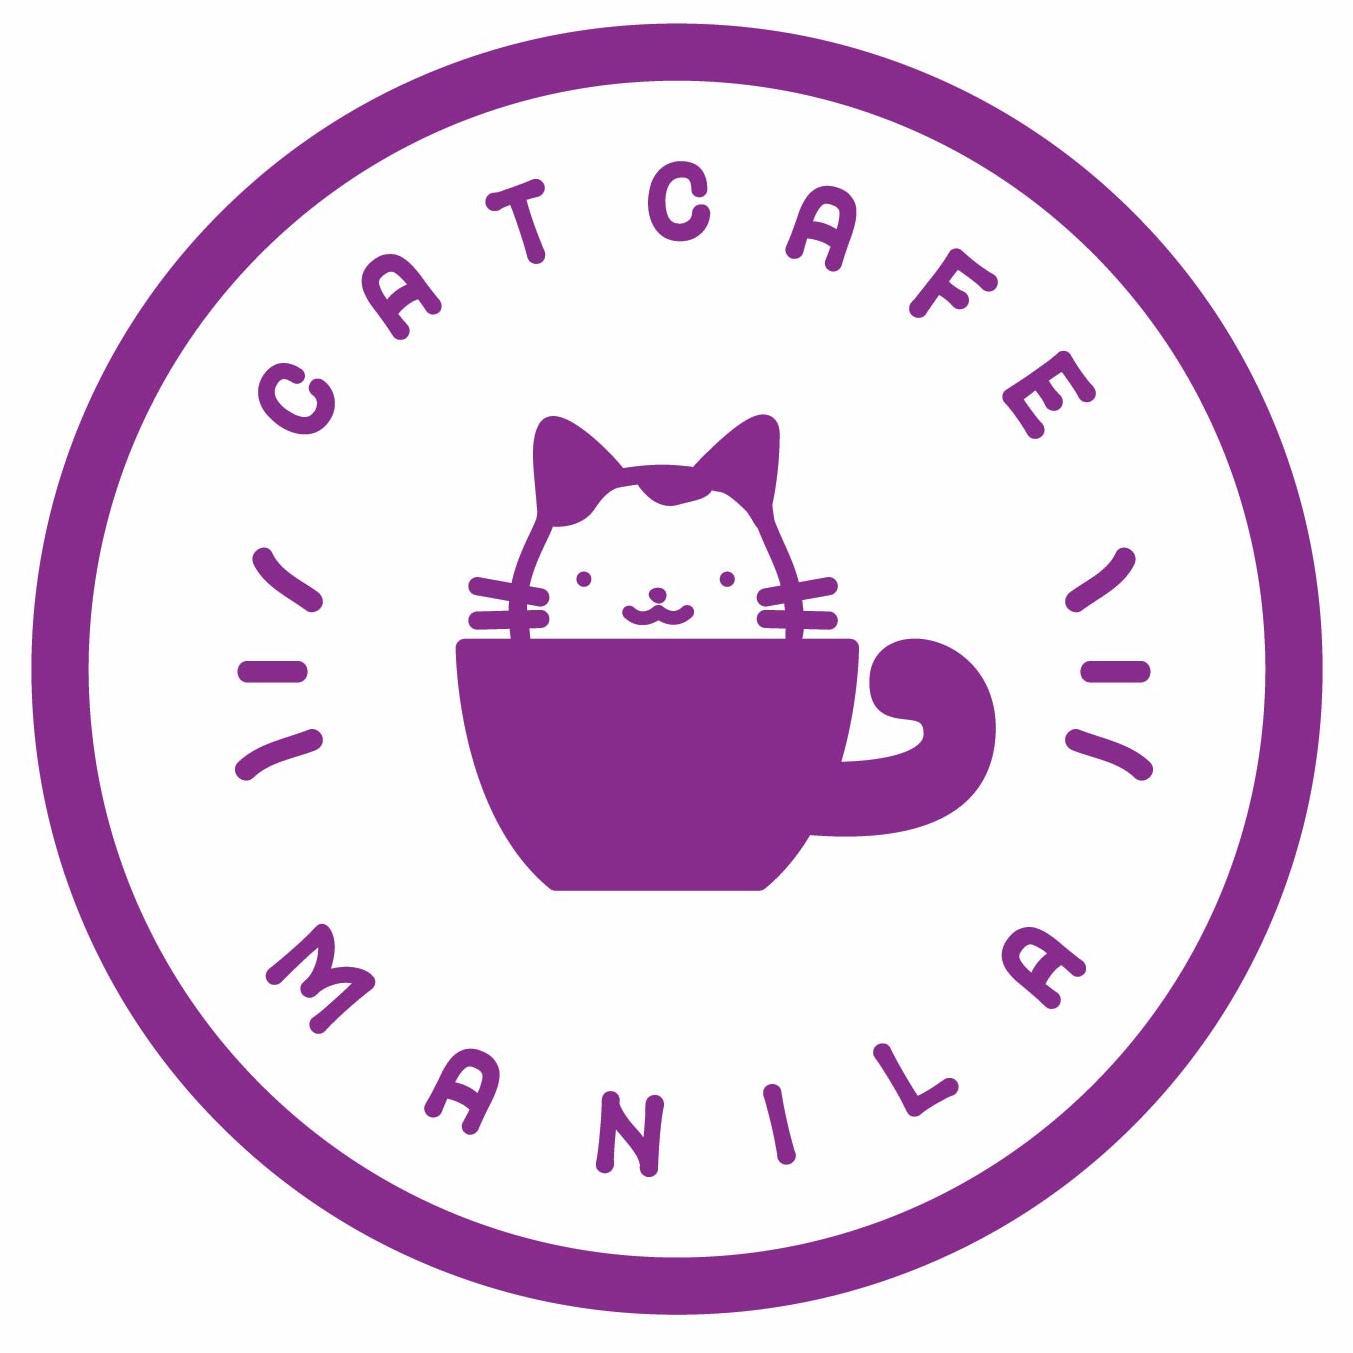  Cat Cafe Manila  on Twitter Thank you Inside Manila  for 